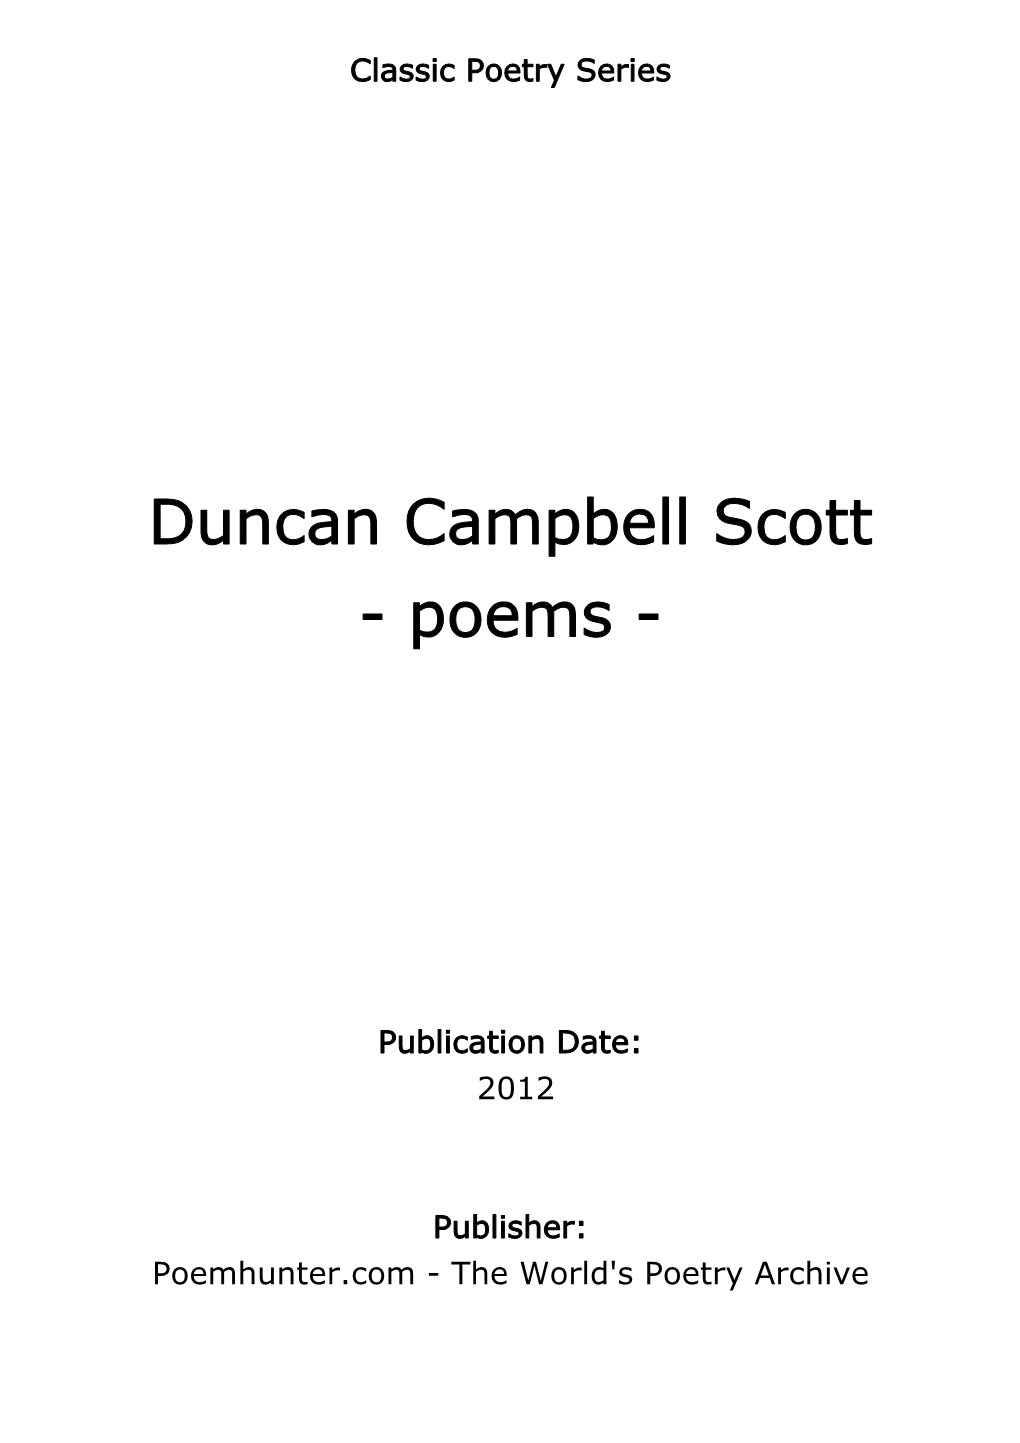 Duncan Campbell Scott - Poems